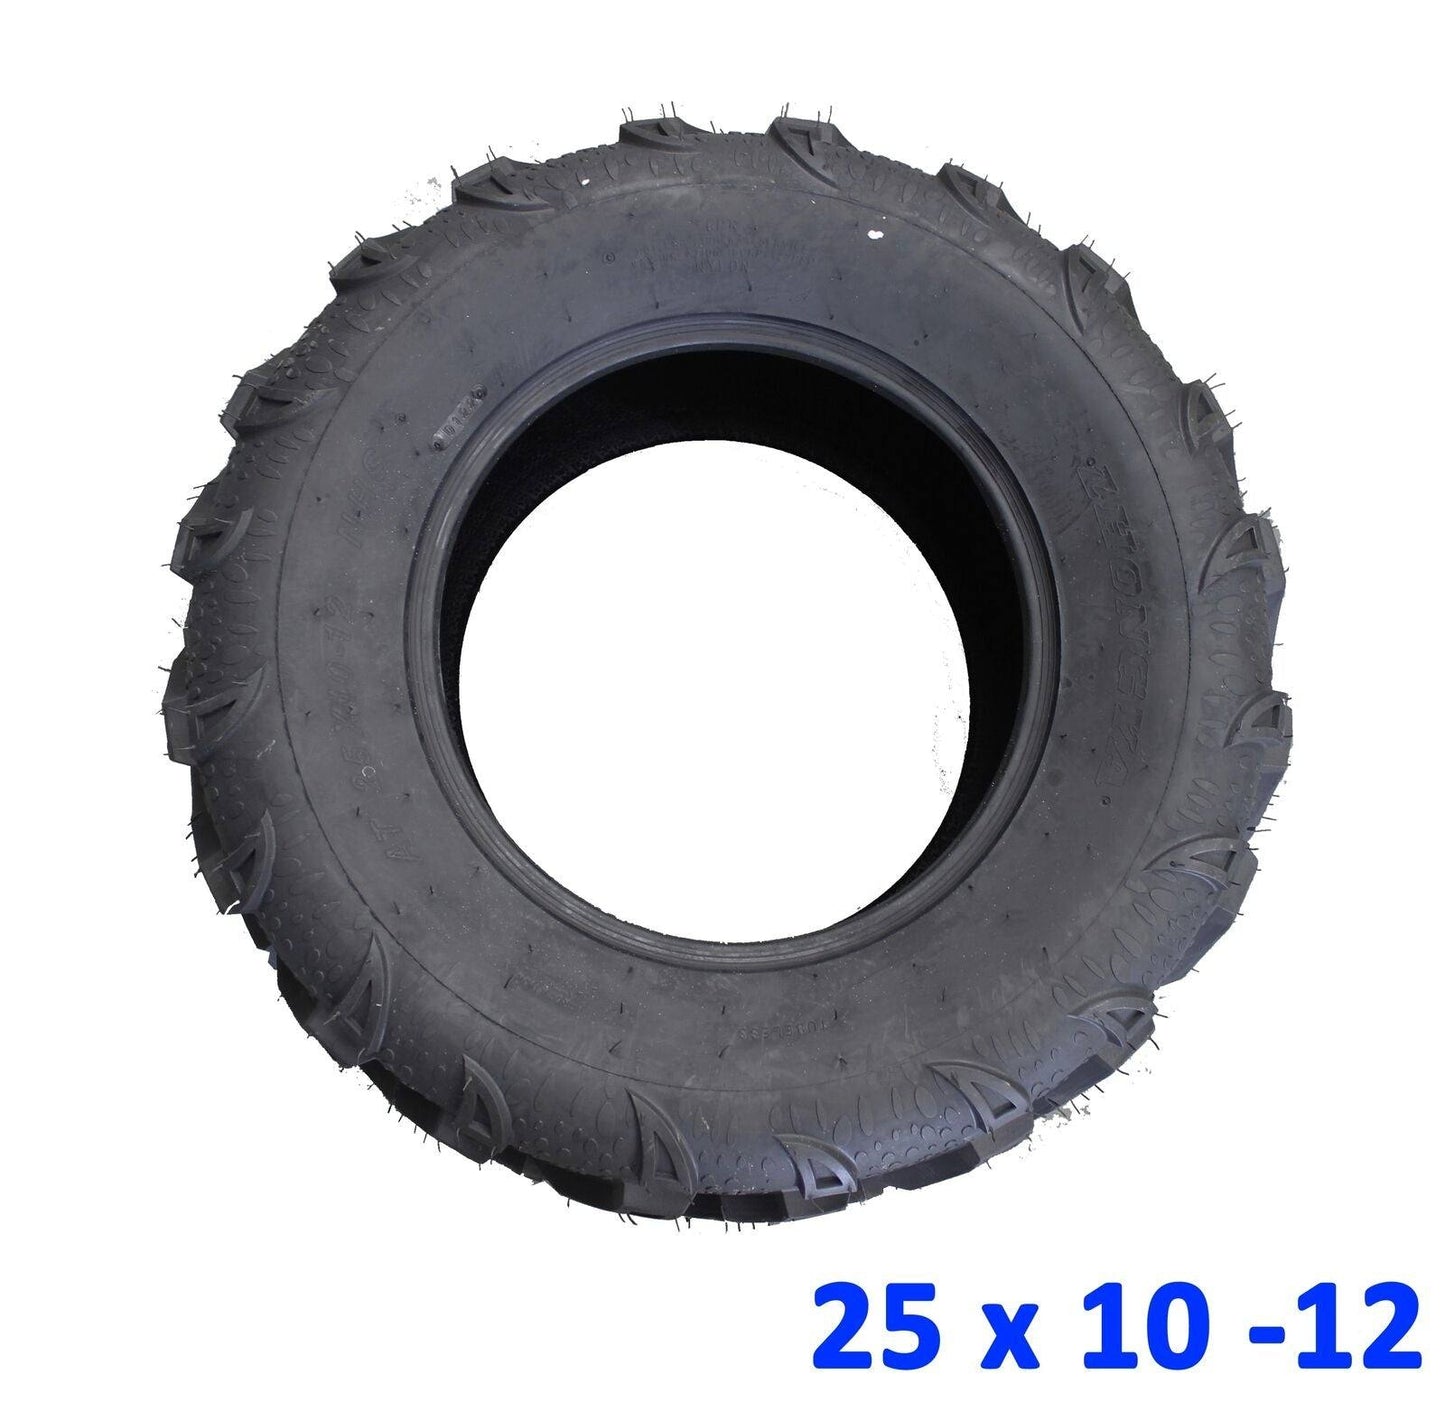 2pcs 25x8-12" & 2pcs 25x10-12" Tyres 6ply For Off Road Quad ATV Farm Dirt Bike - TDRMOTO